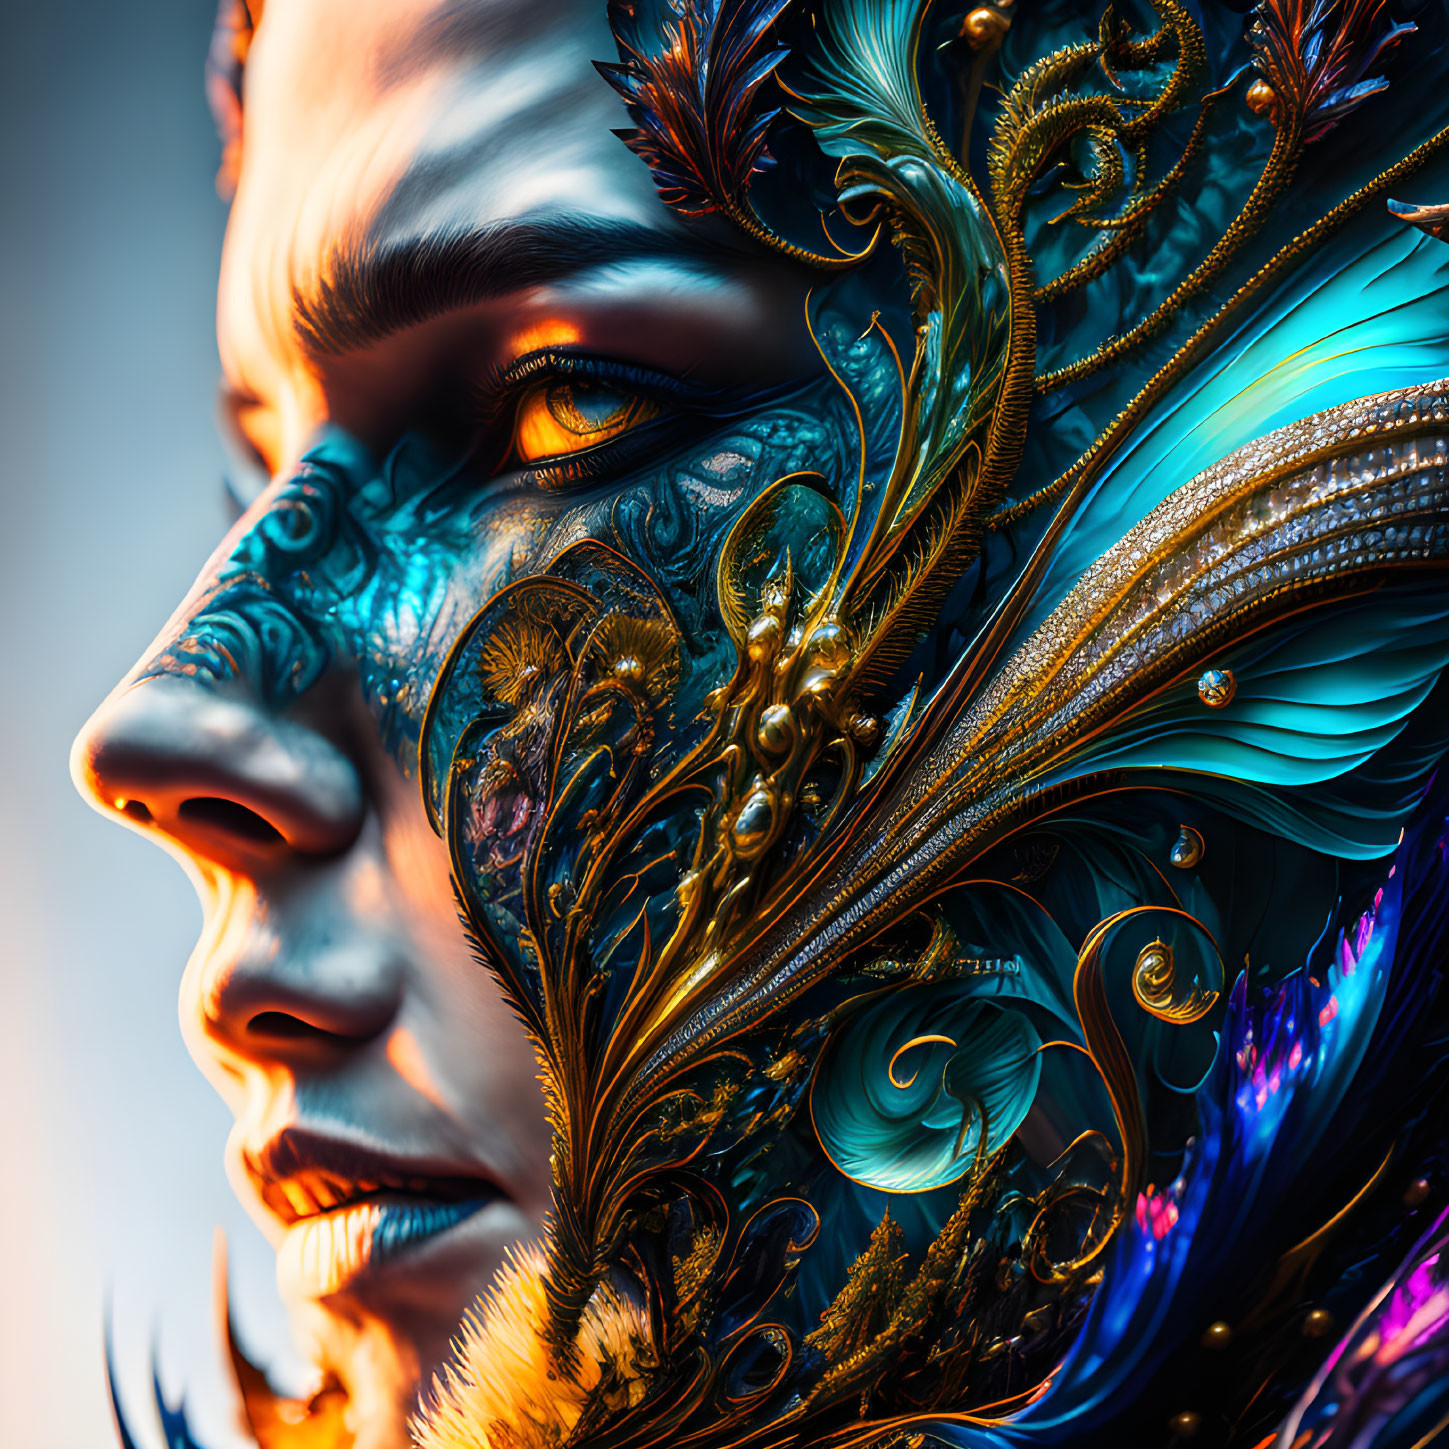 Colorful digital art portrait with golden filigree on face against blue background